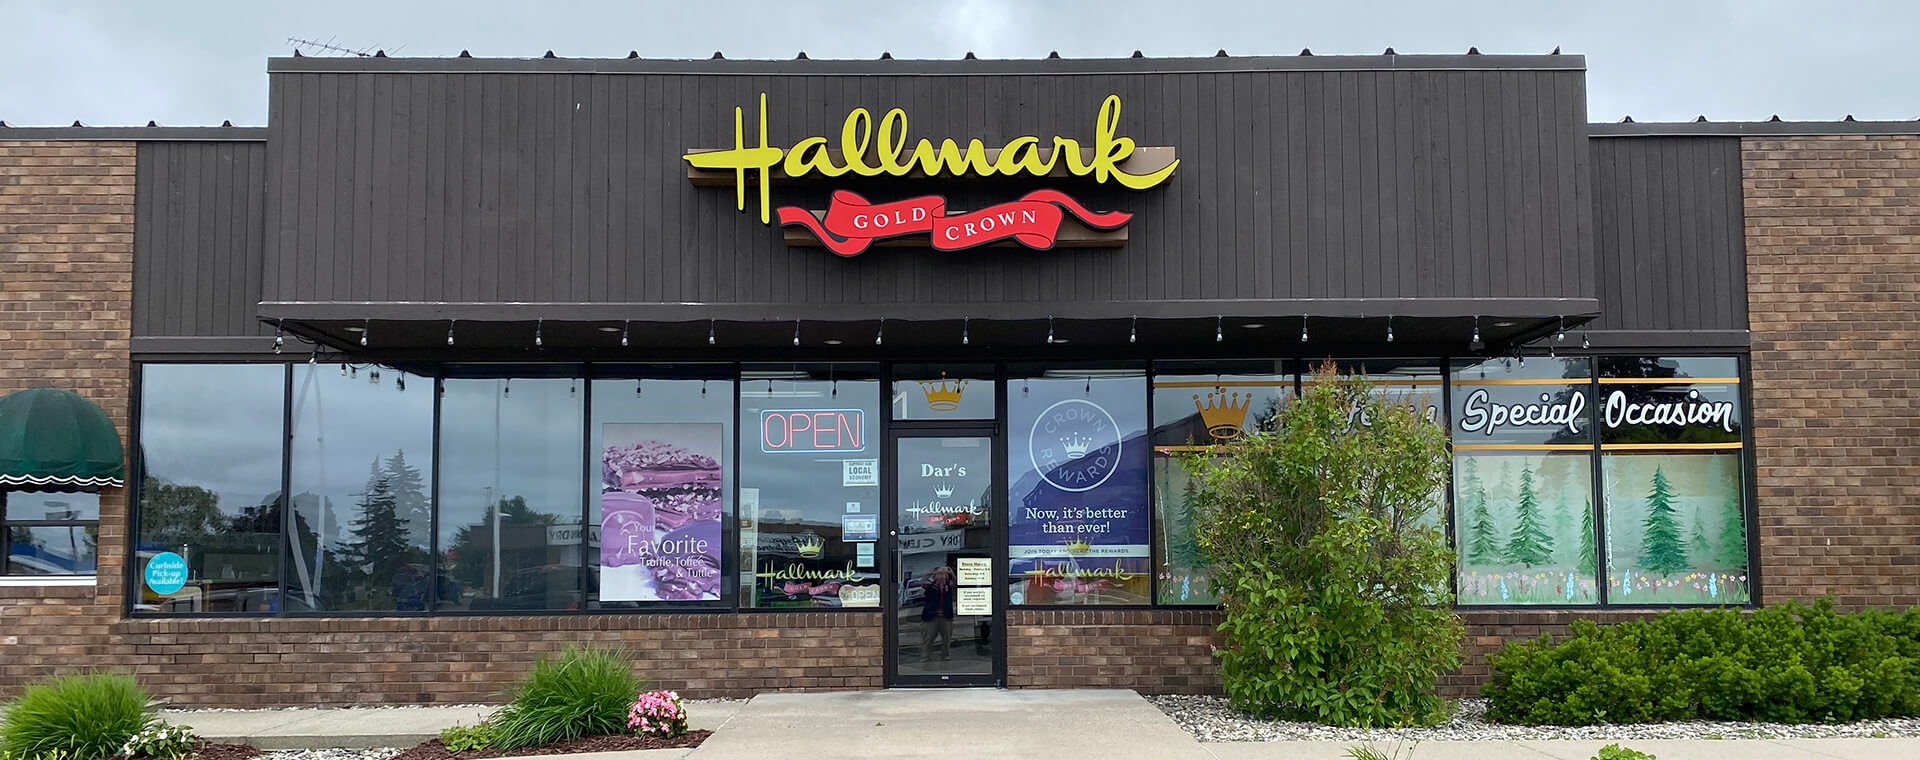 Hallmark Store in Cheboygan, Michigan